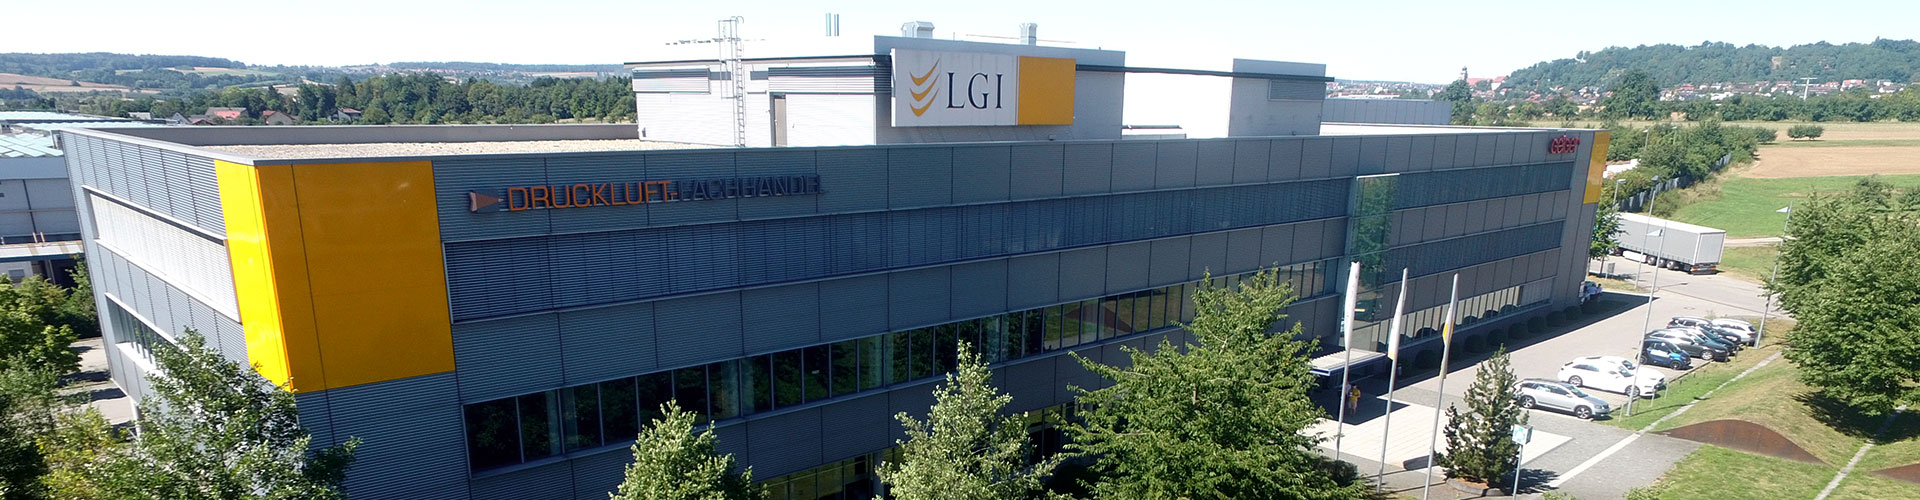 LGI building for compres